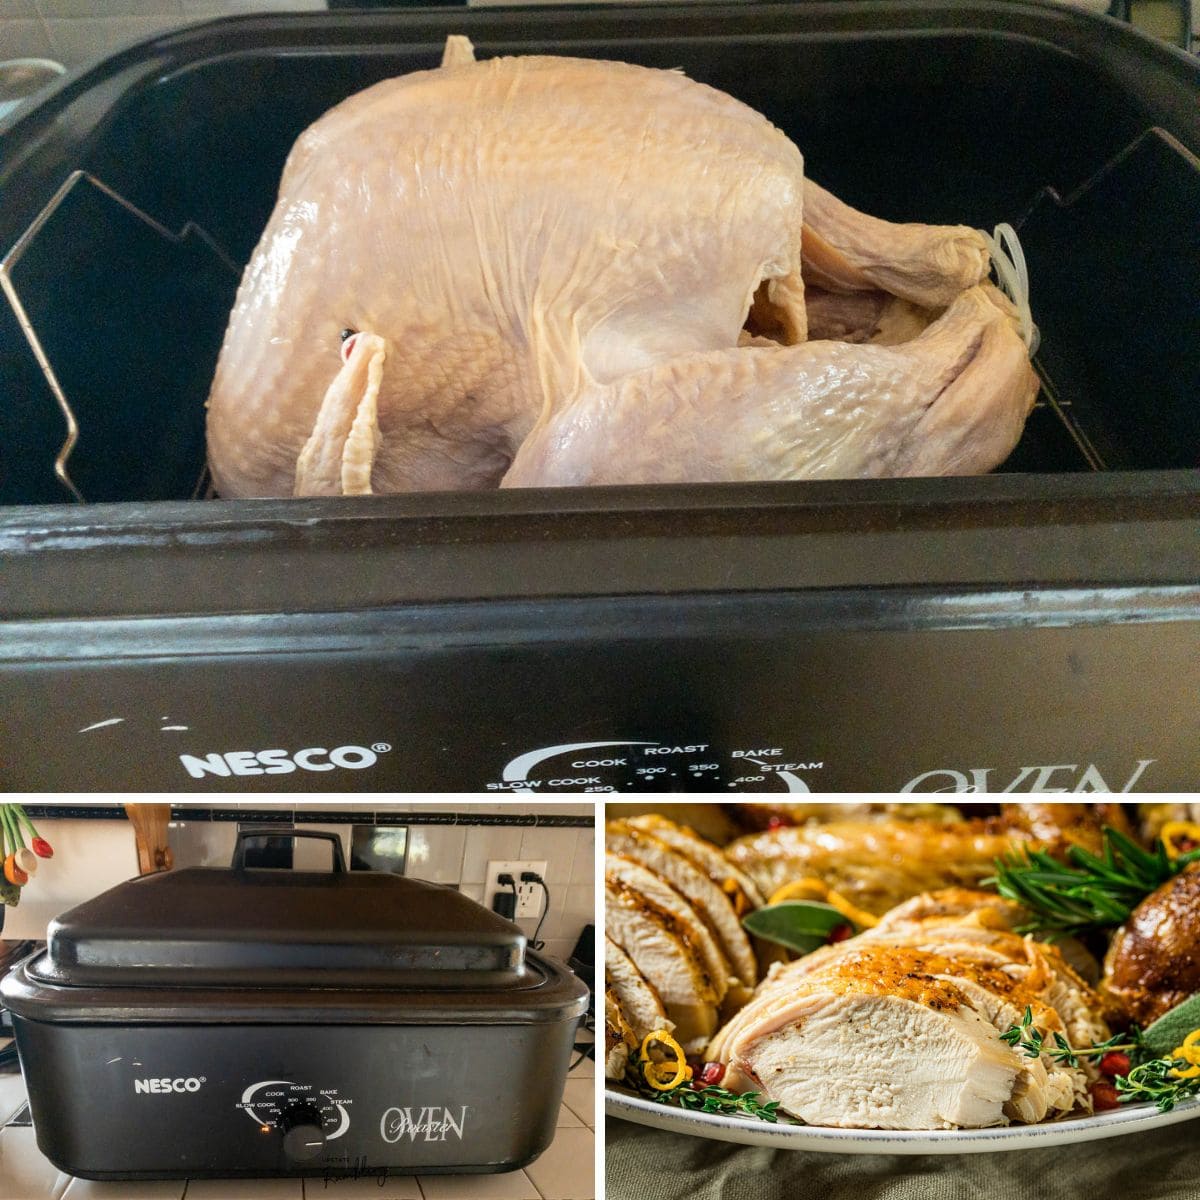 Roaster Oven - Fits Holiday Turkey - 22-Quart